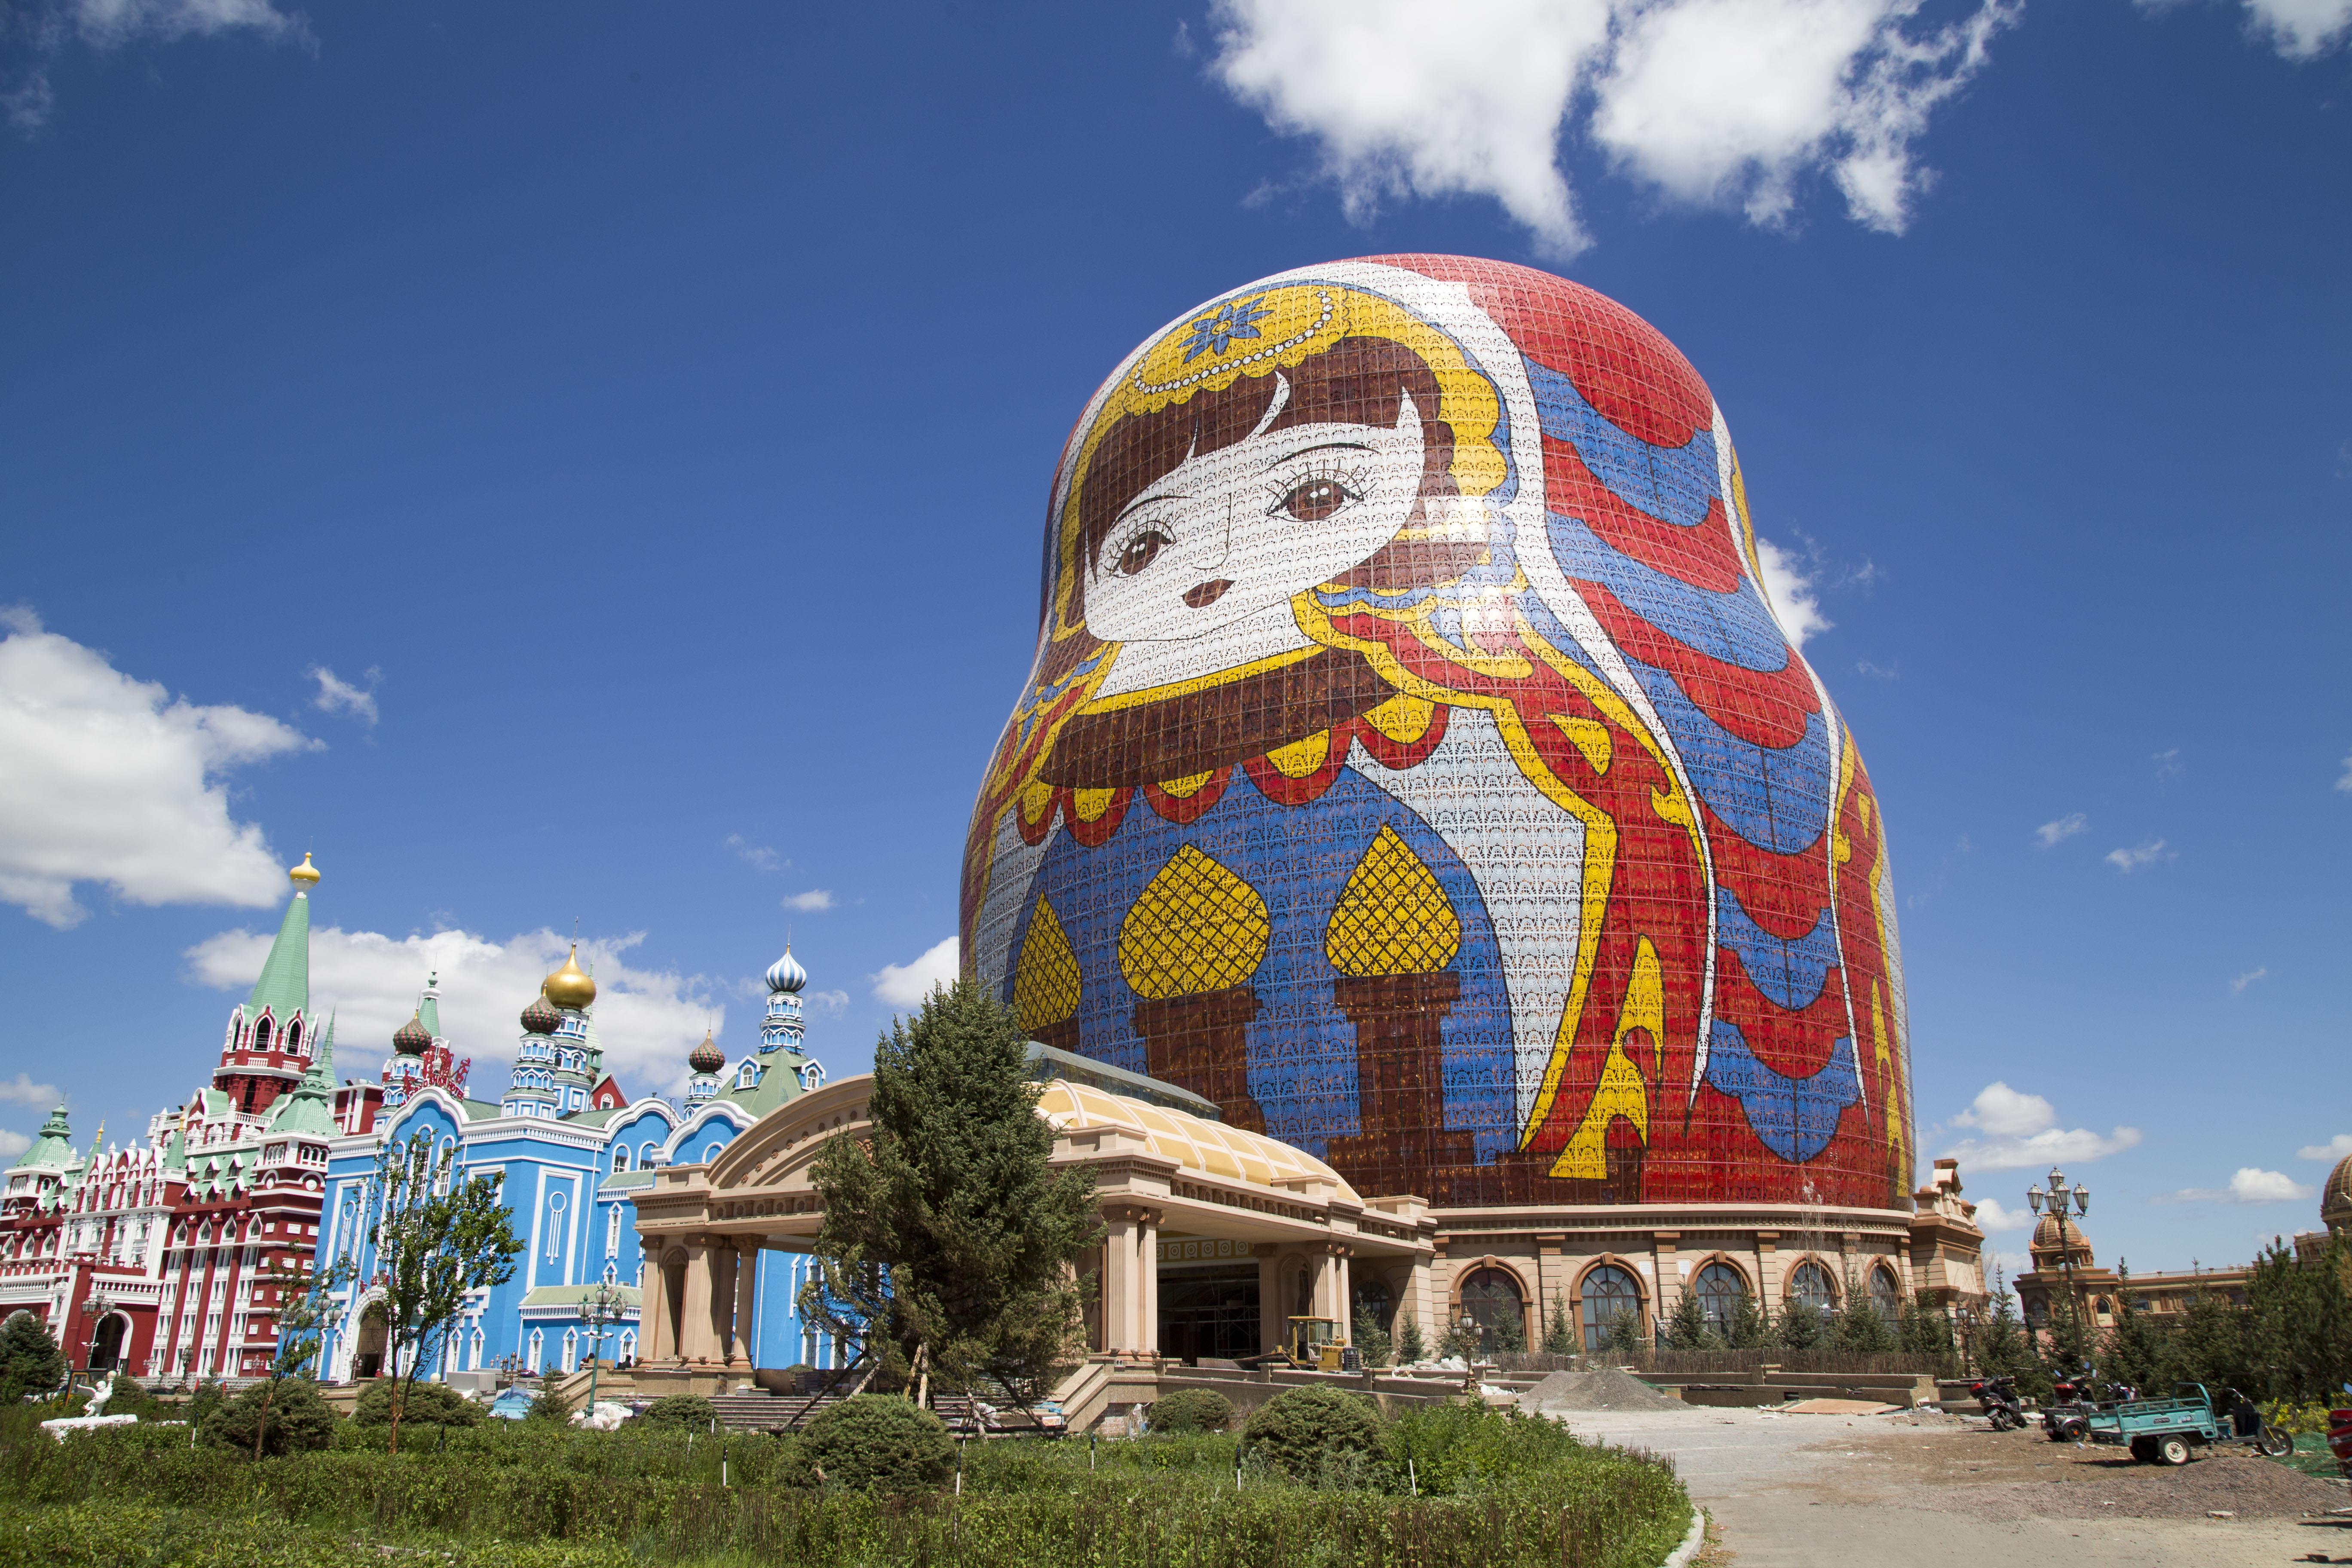 Russian Nesting Dolls Themed Square in Inner Mongolia